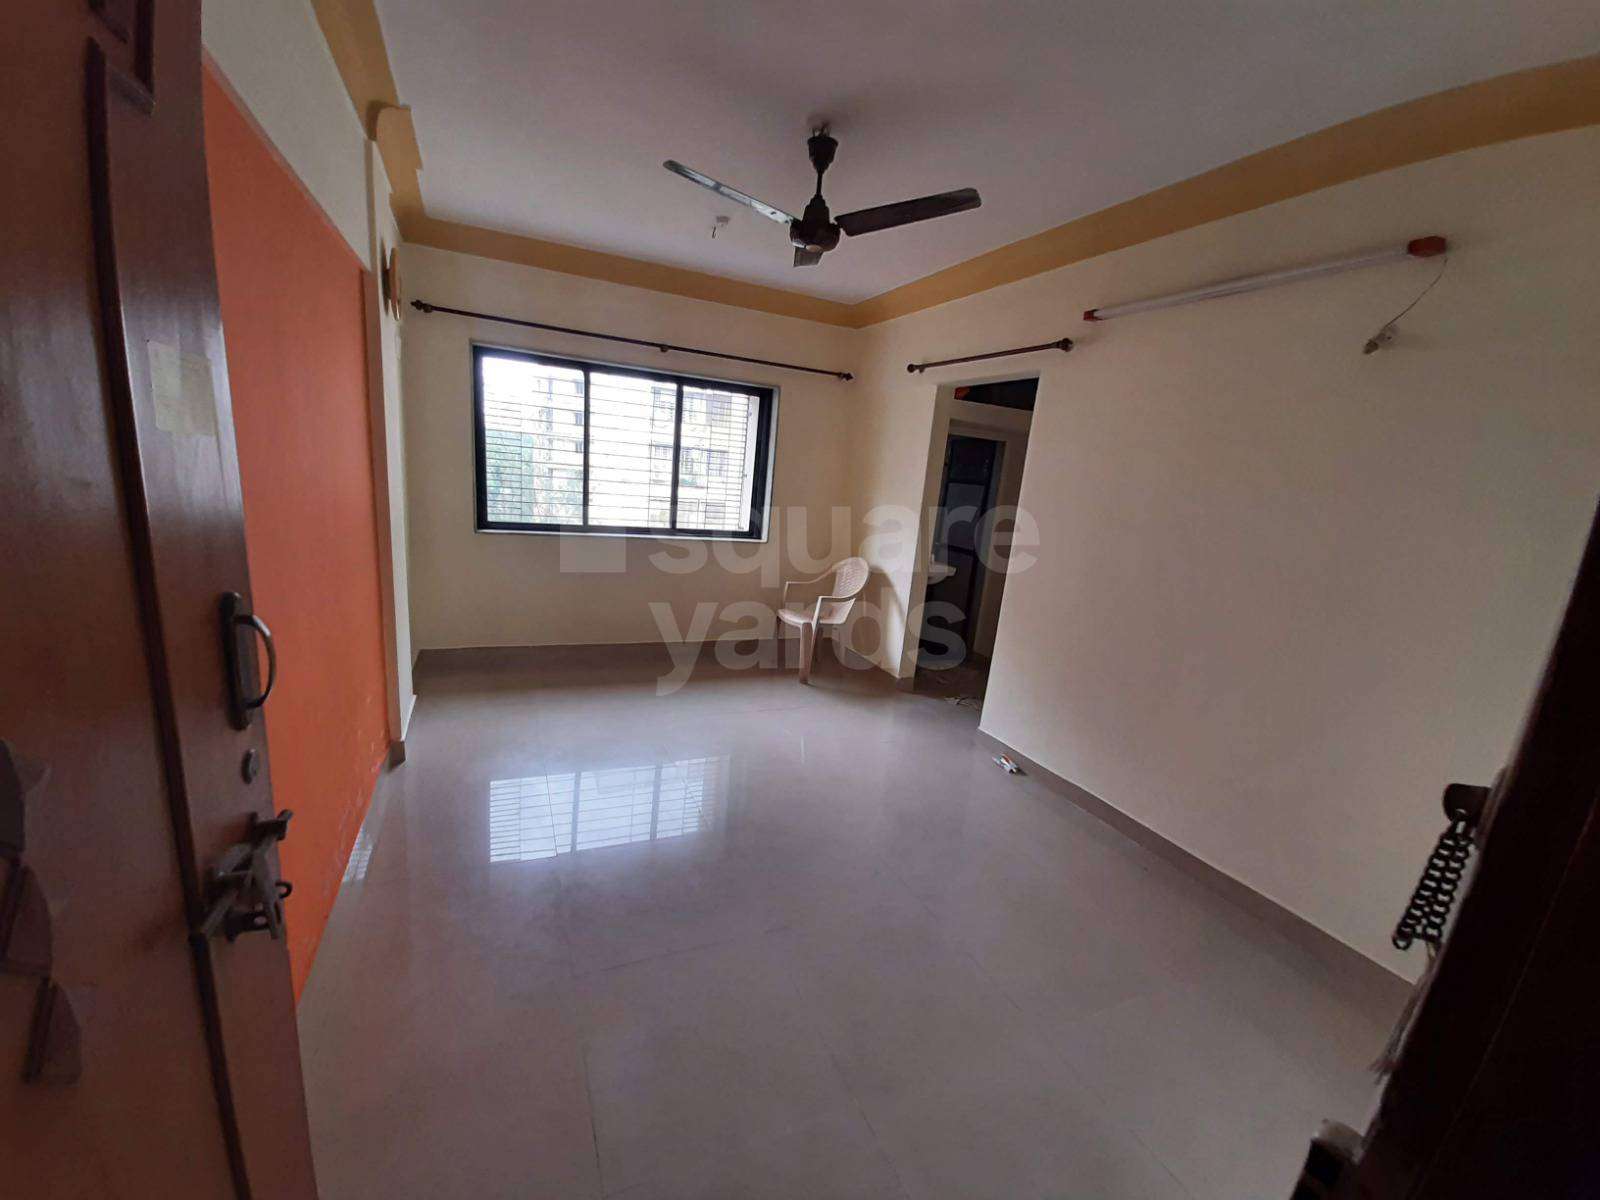 Resale 1 Bedroom 400 Sq.Ft. Apartment in Vishnu Park Viraj Apartments ...